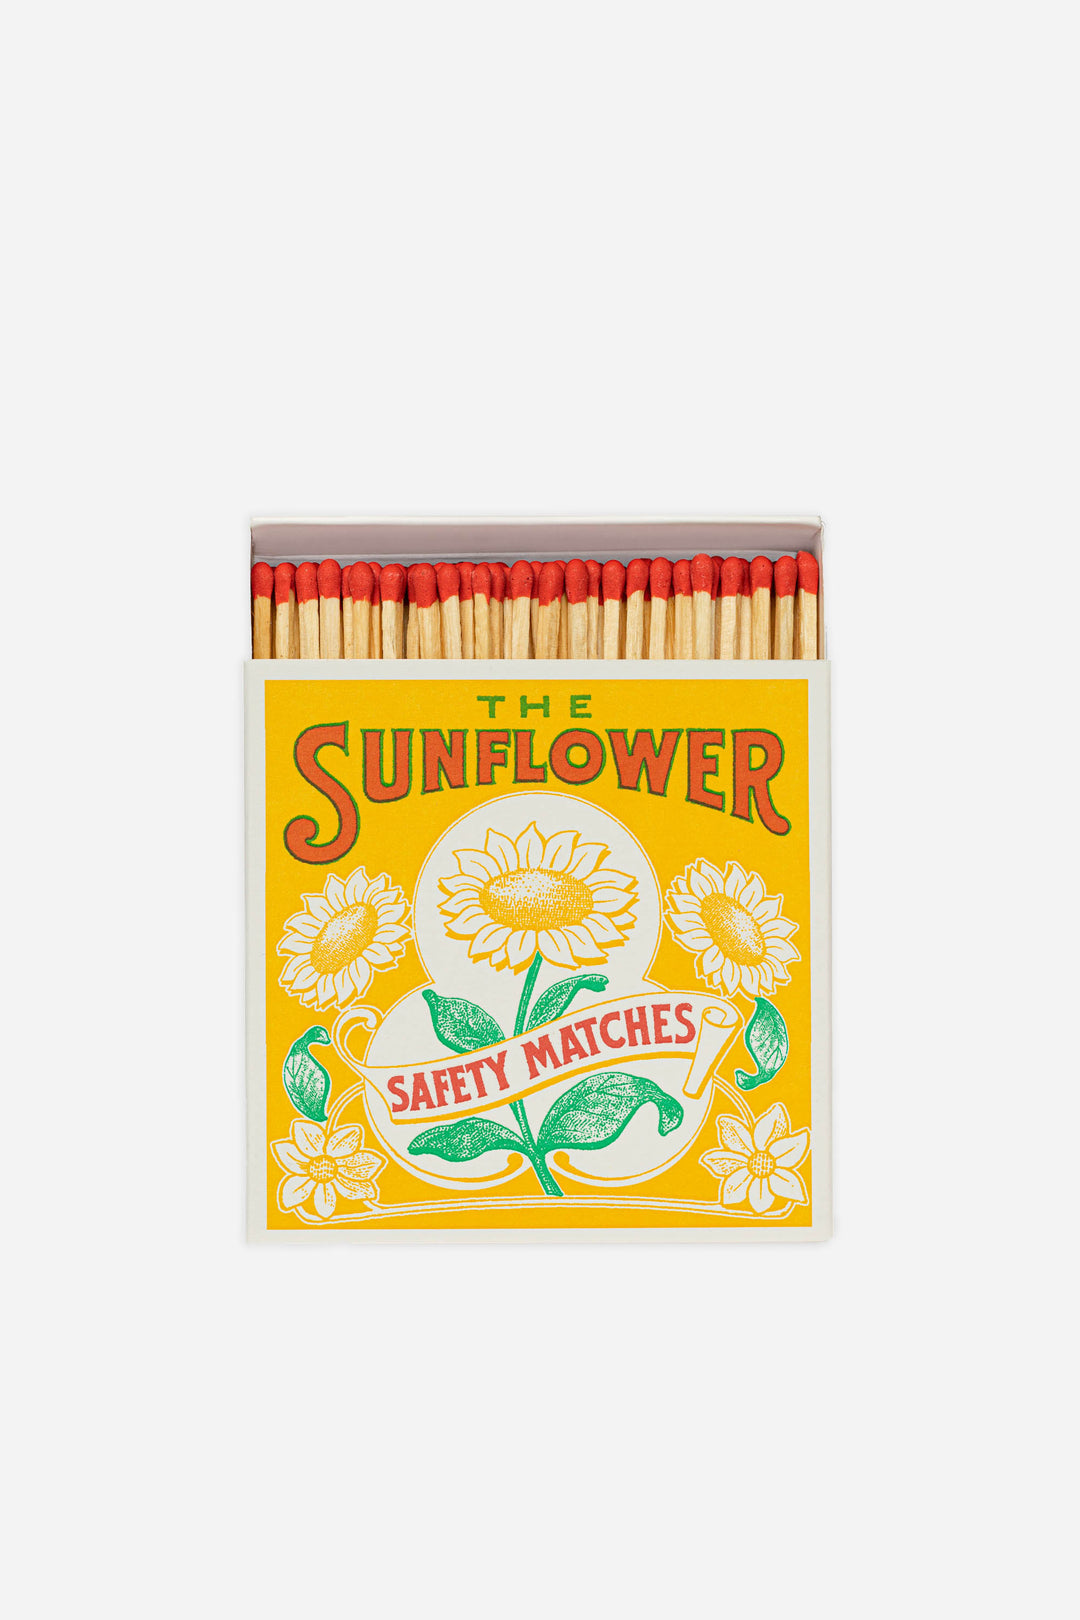 Matches / Sunflower